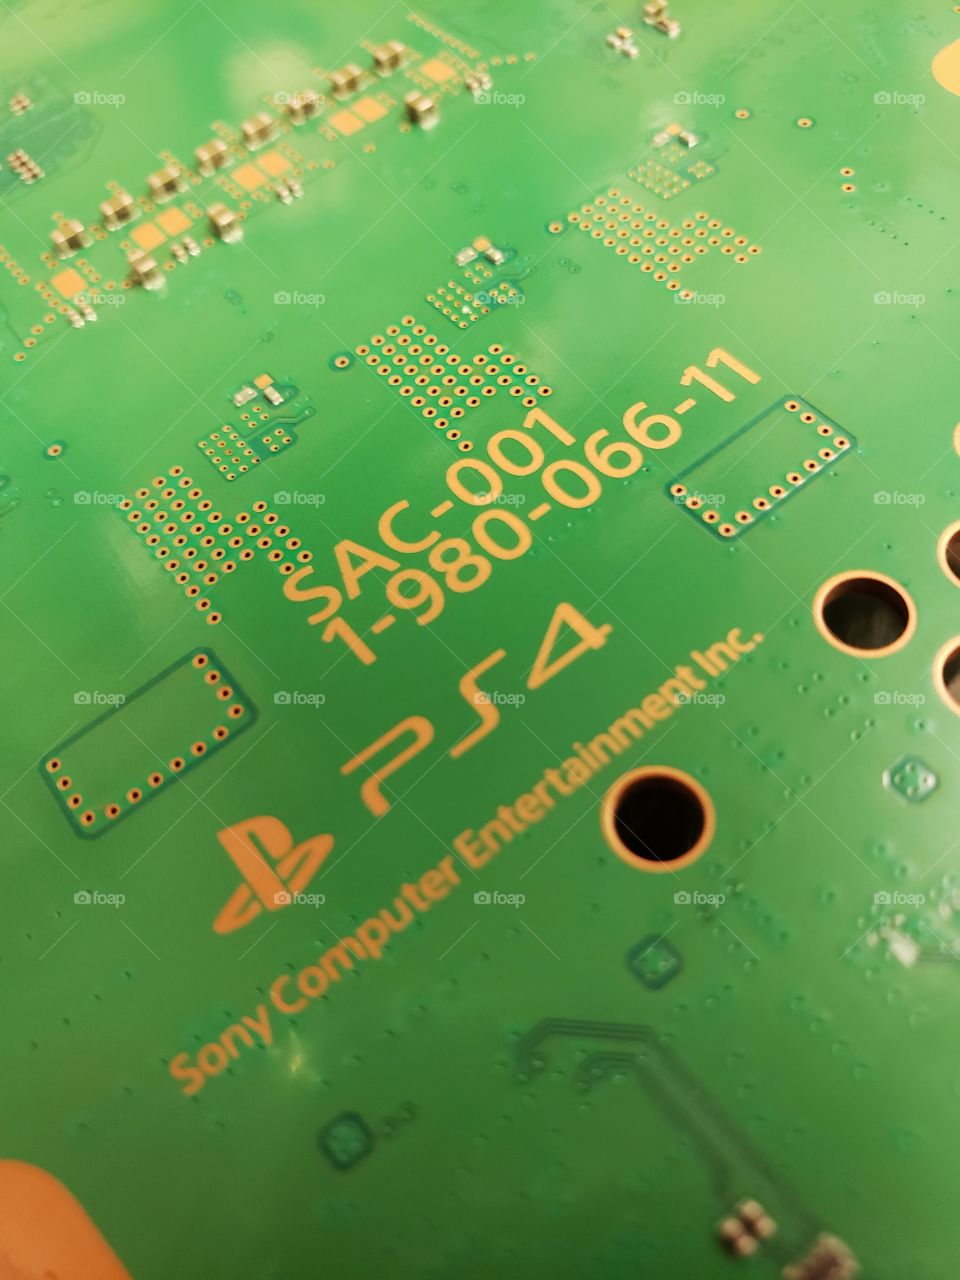 Sony Playstation 4 Motherboard